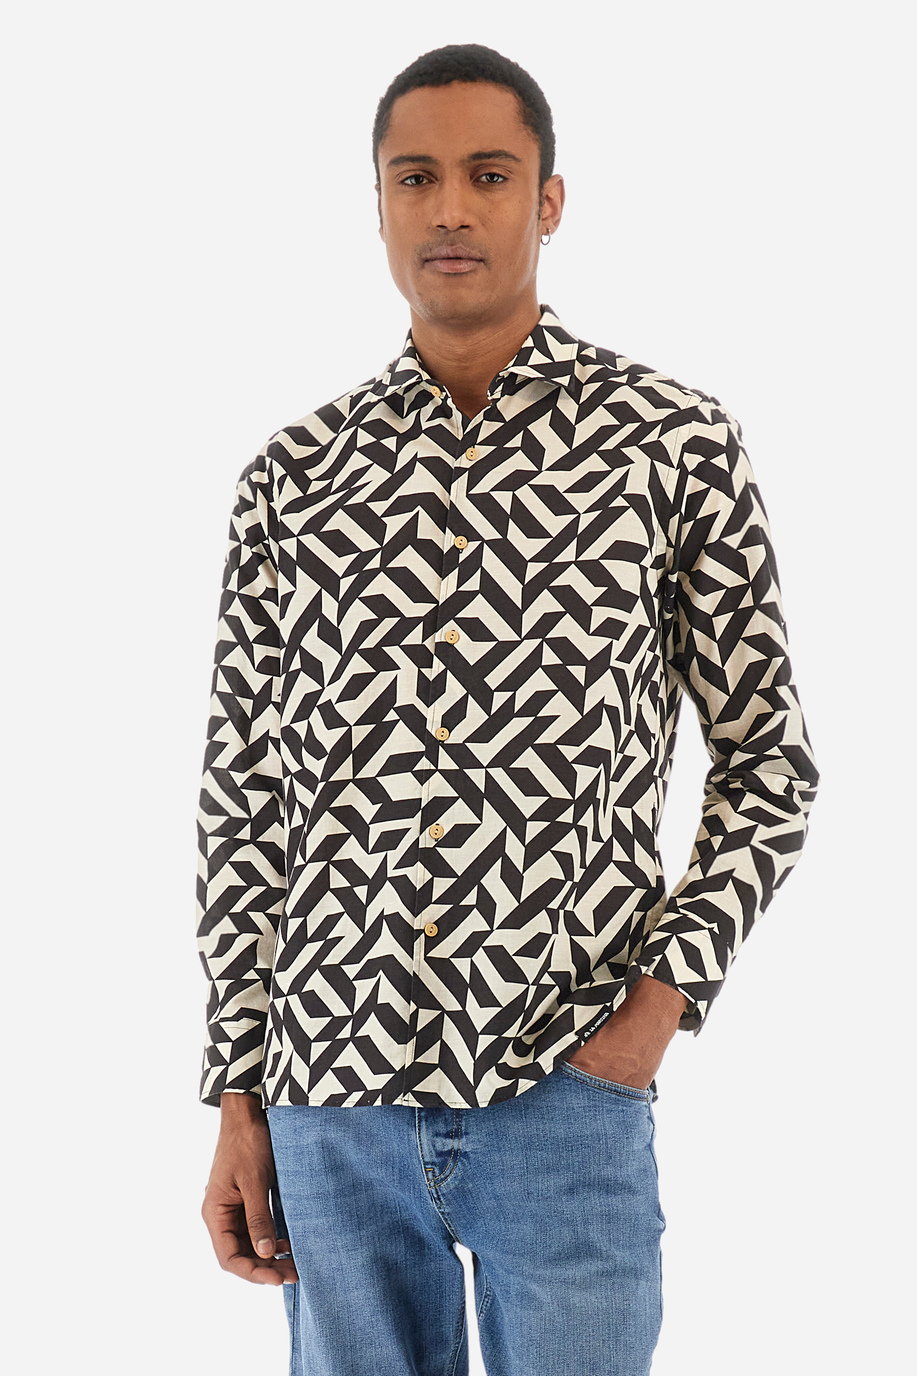 Patterned cotton and linen shirt - Innocent - Capsule | La Martina - Official Online Shop